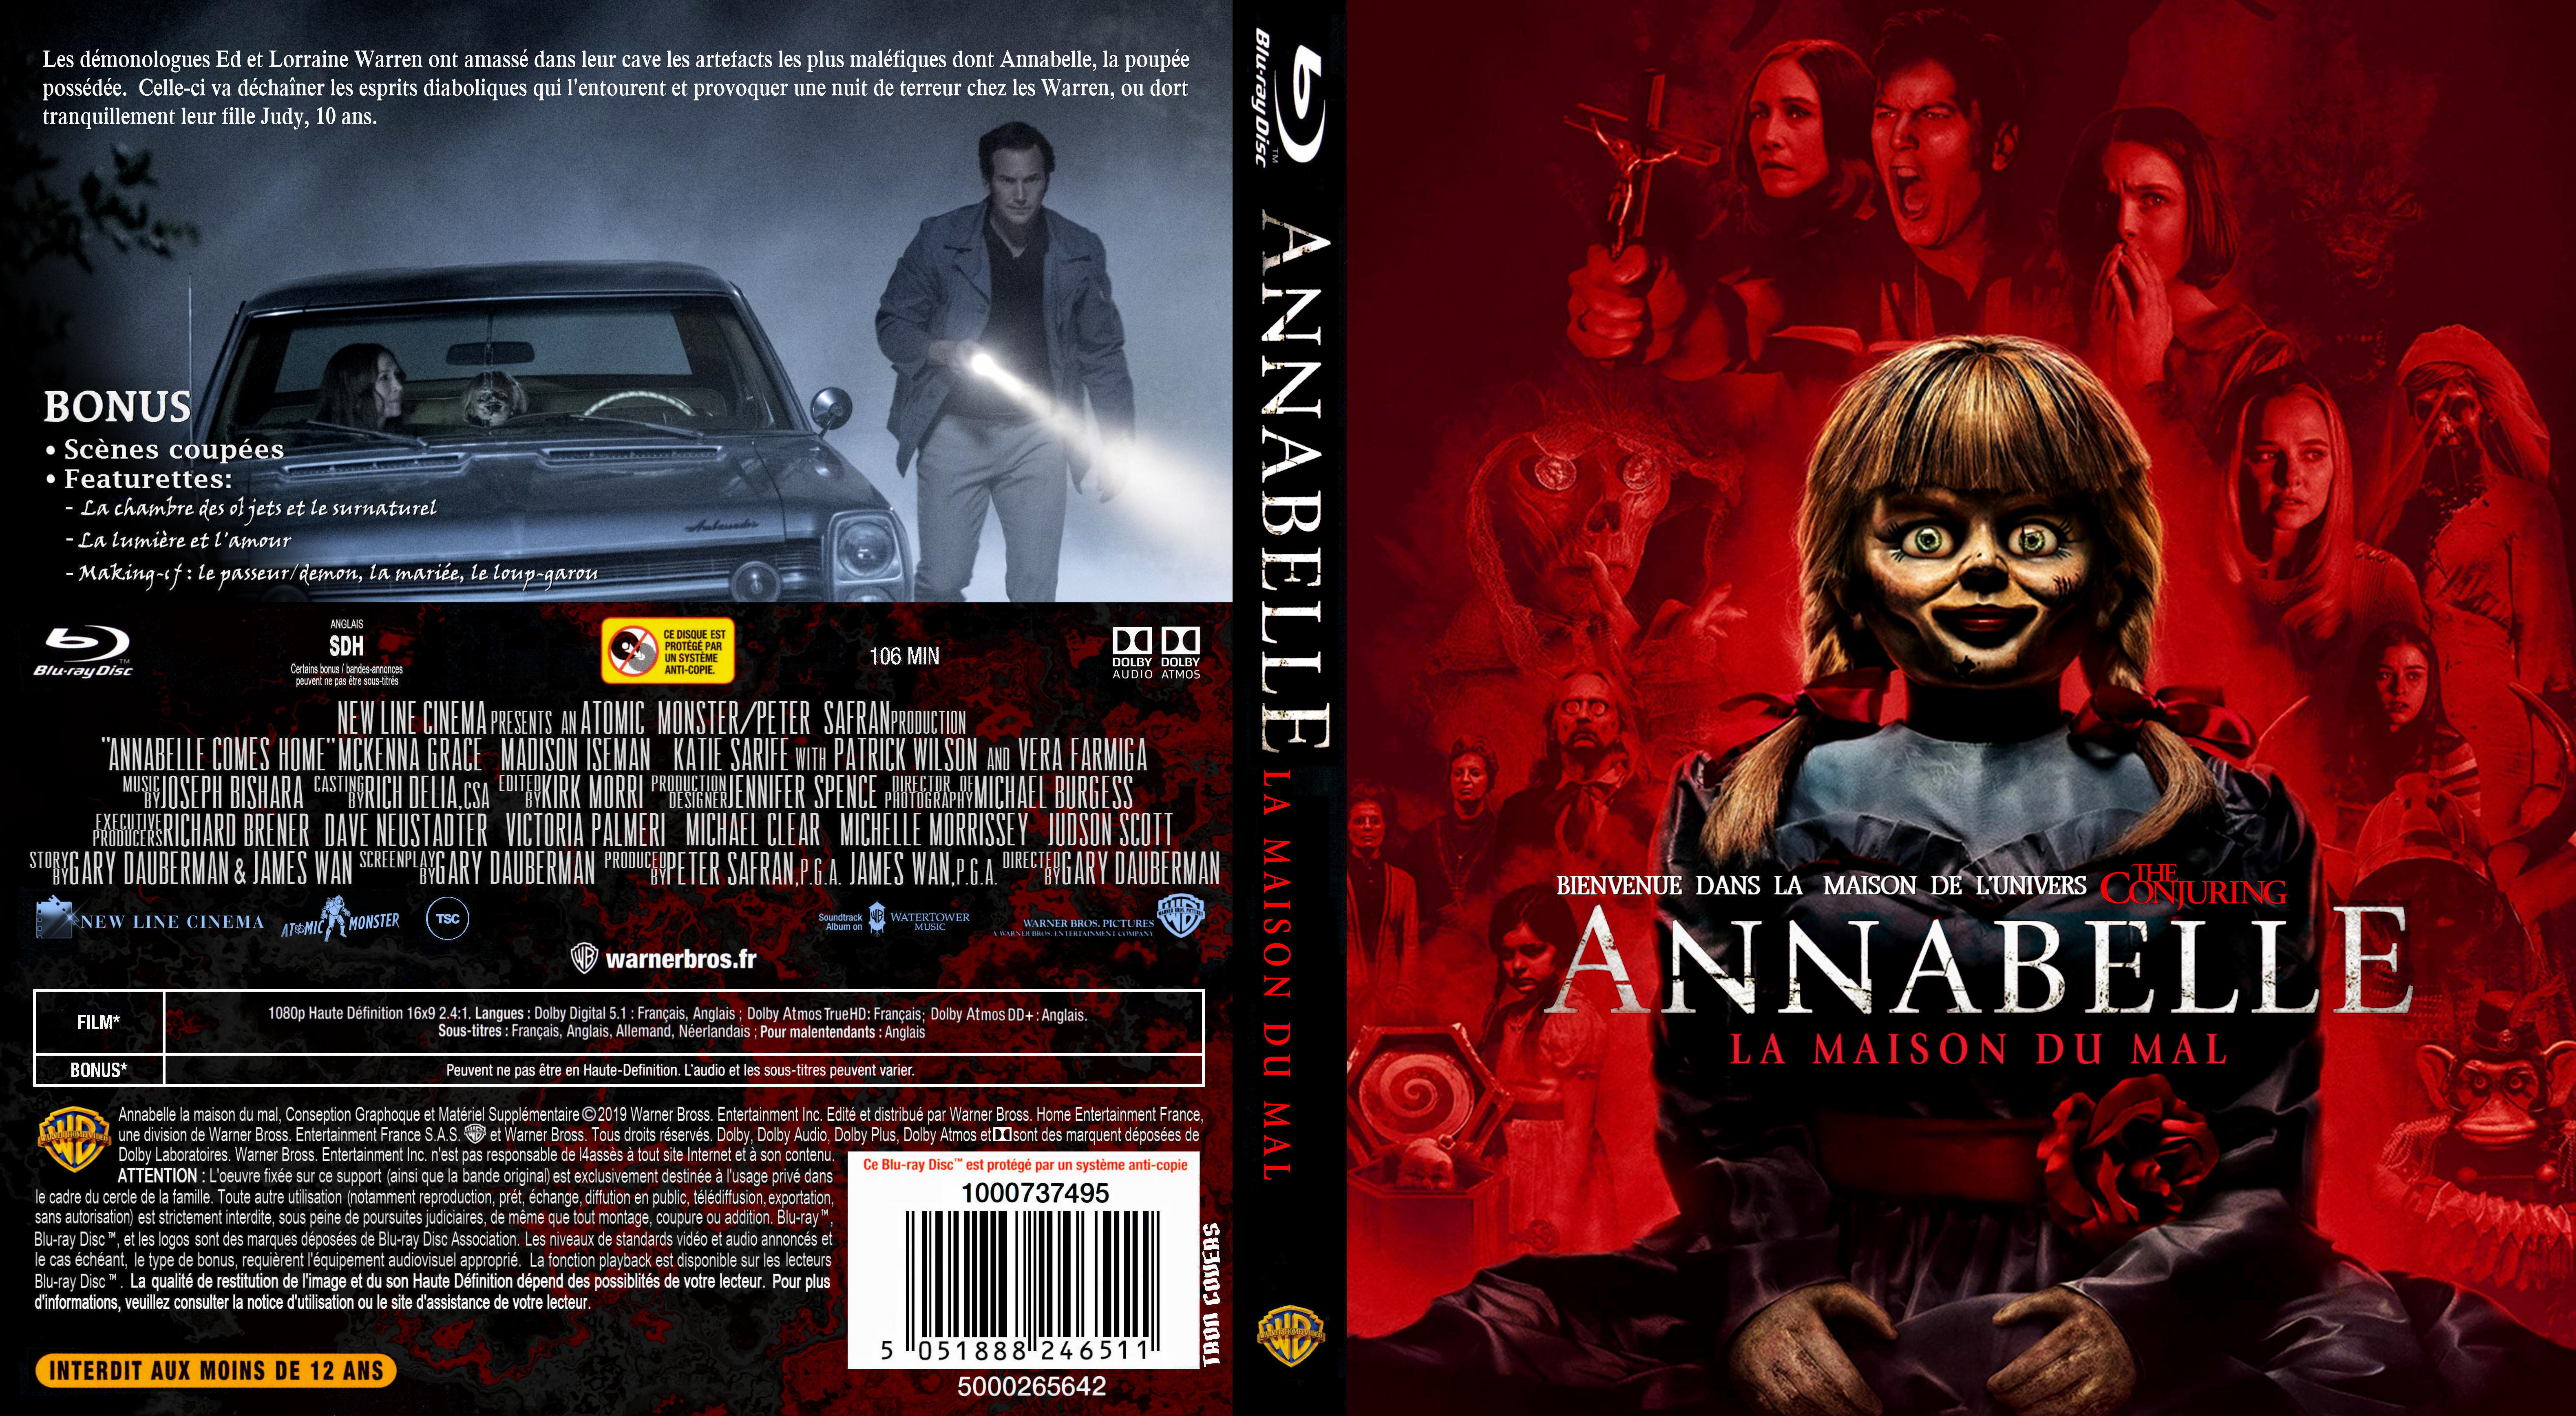 Jaquette DVD Annabelle 3 La maison du mal custom (BLU-RAY)